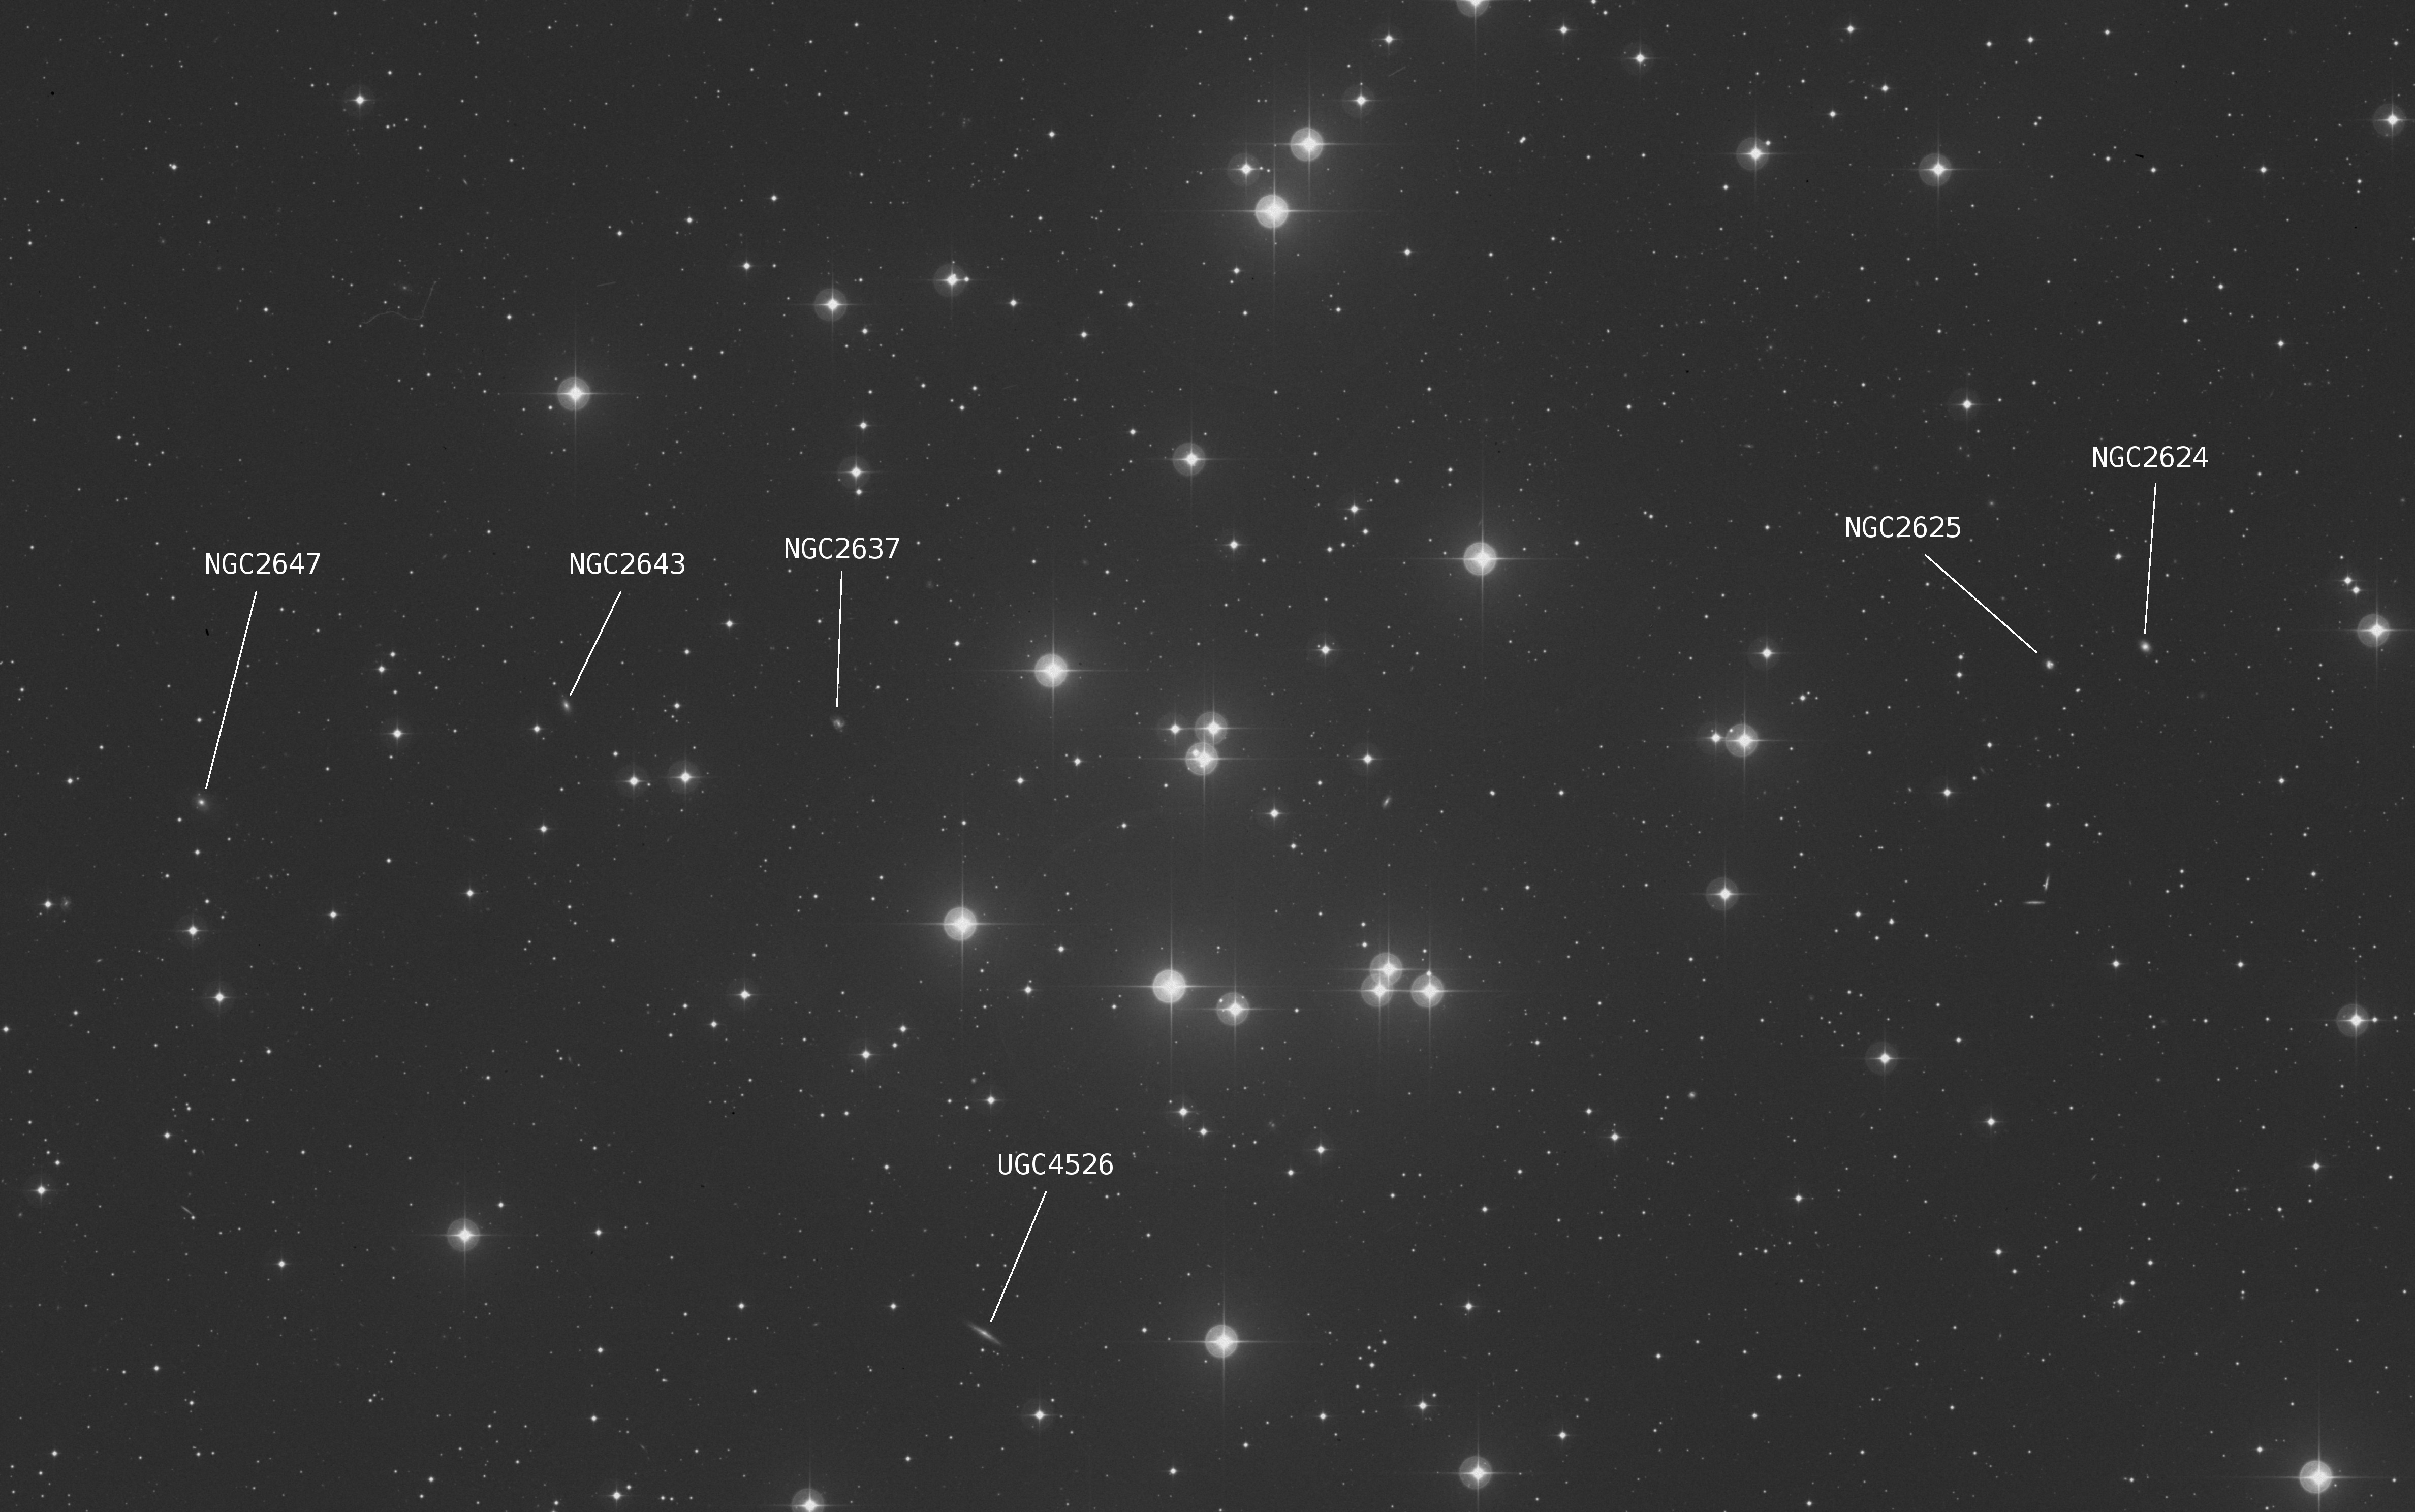 Galaxies in Messier 44